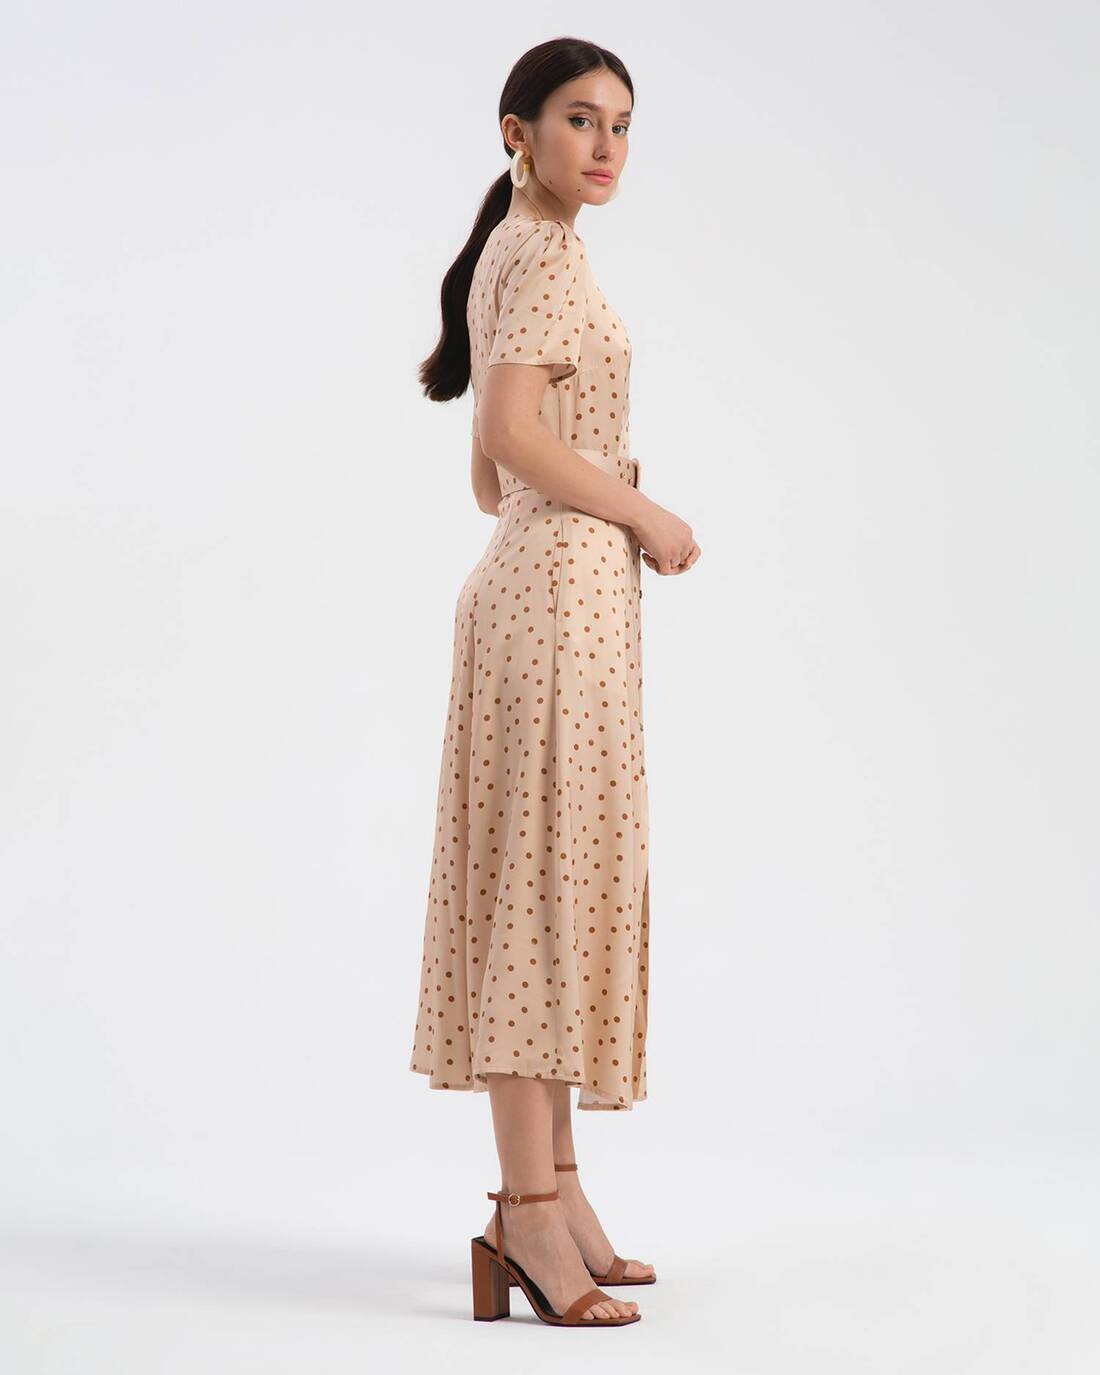 Polka dot dress with square neckline